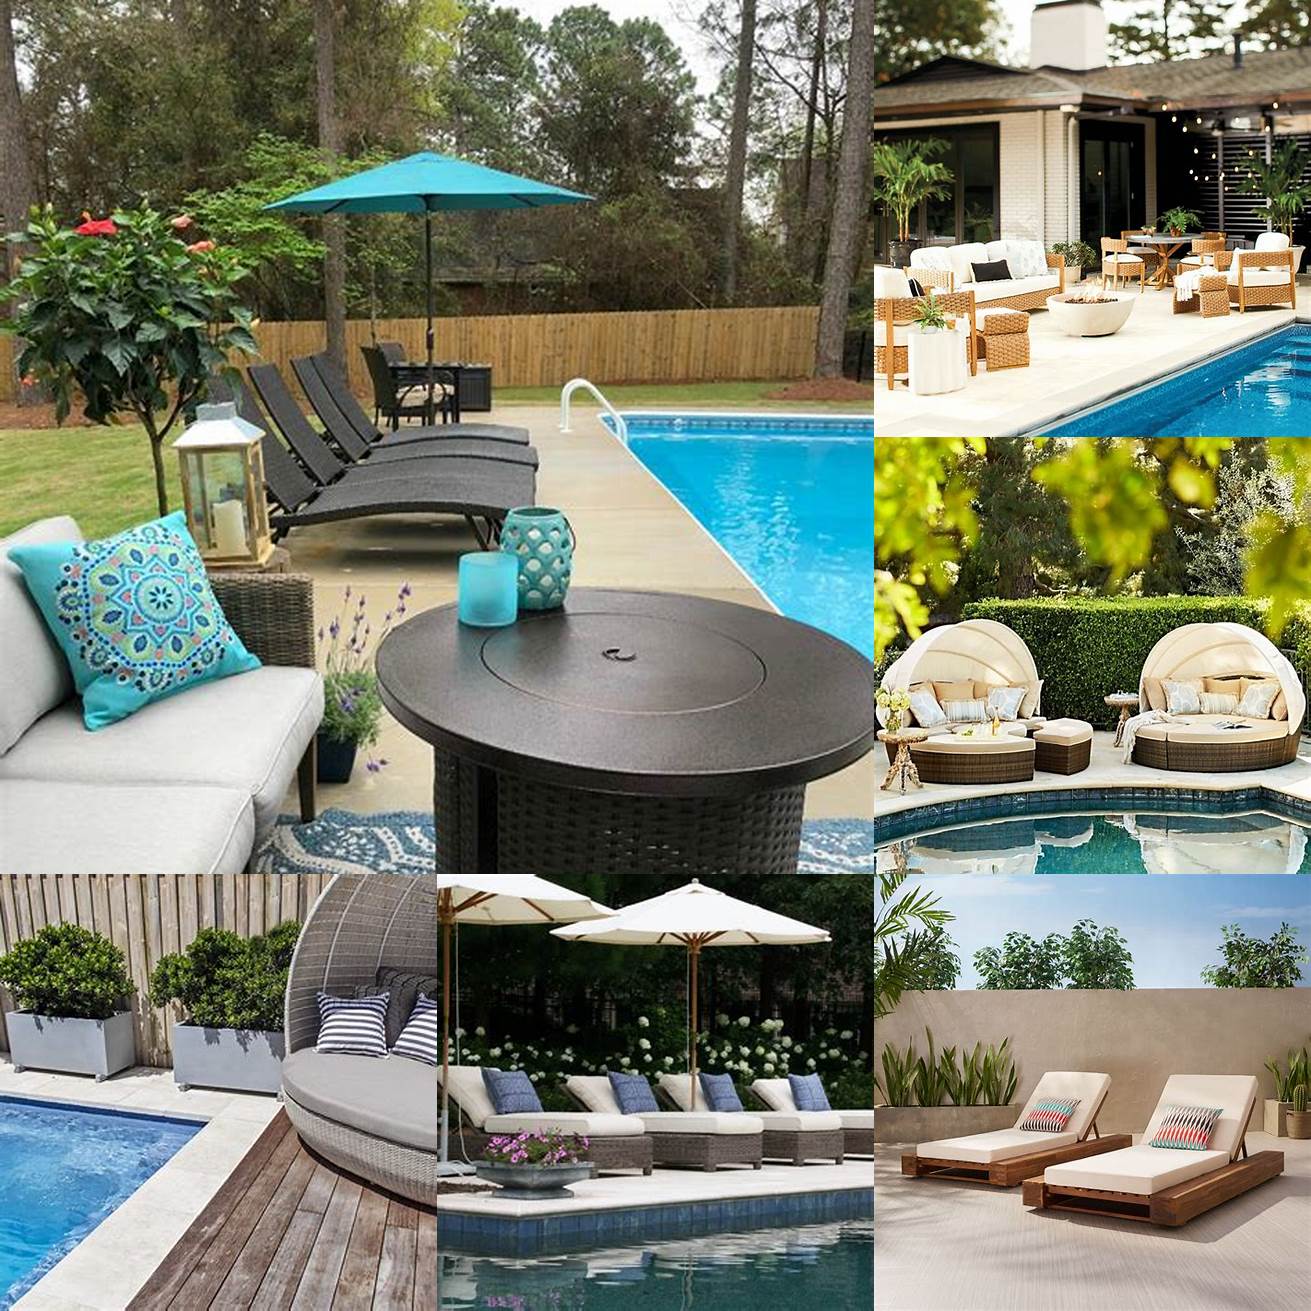 Acacia furniture in a pool area